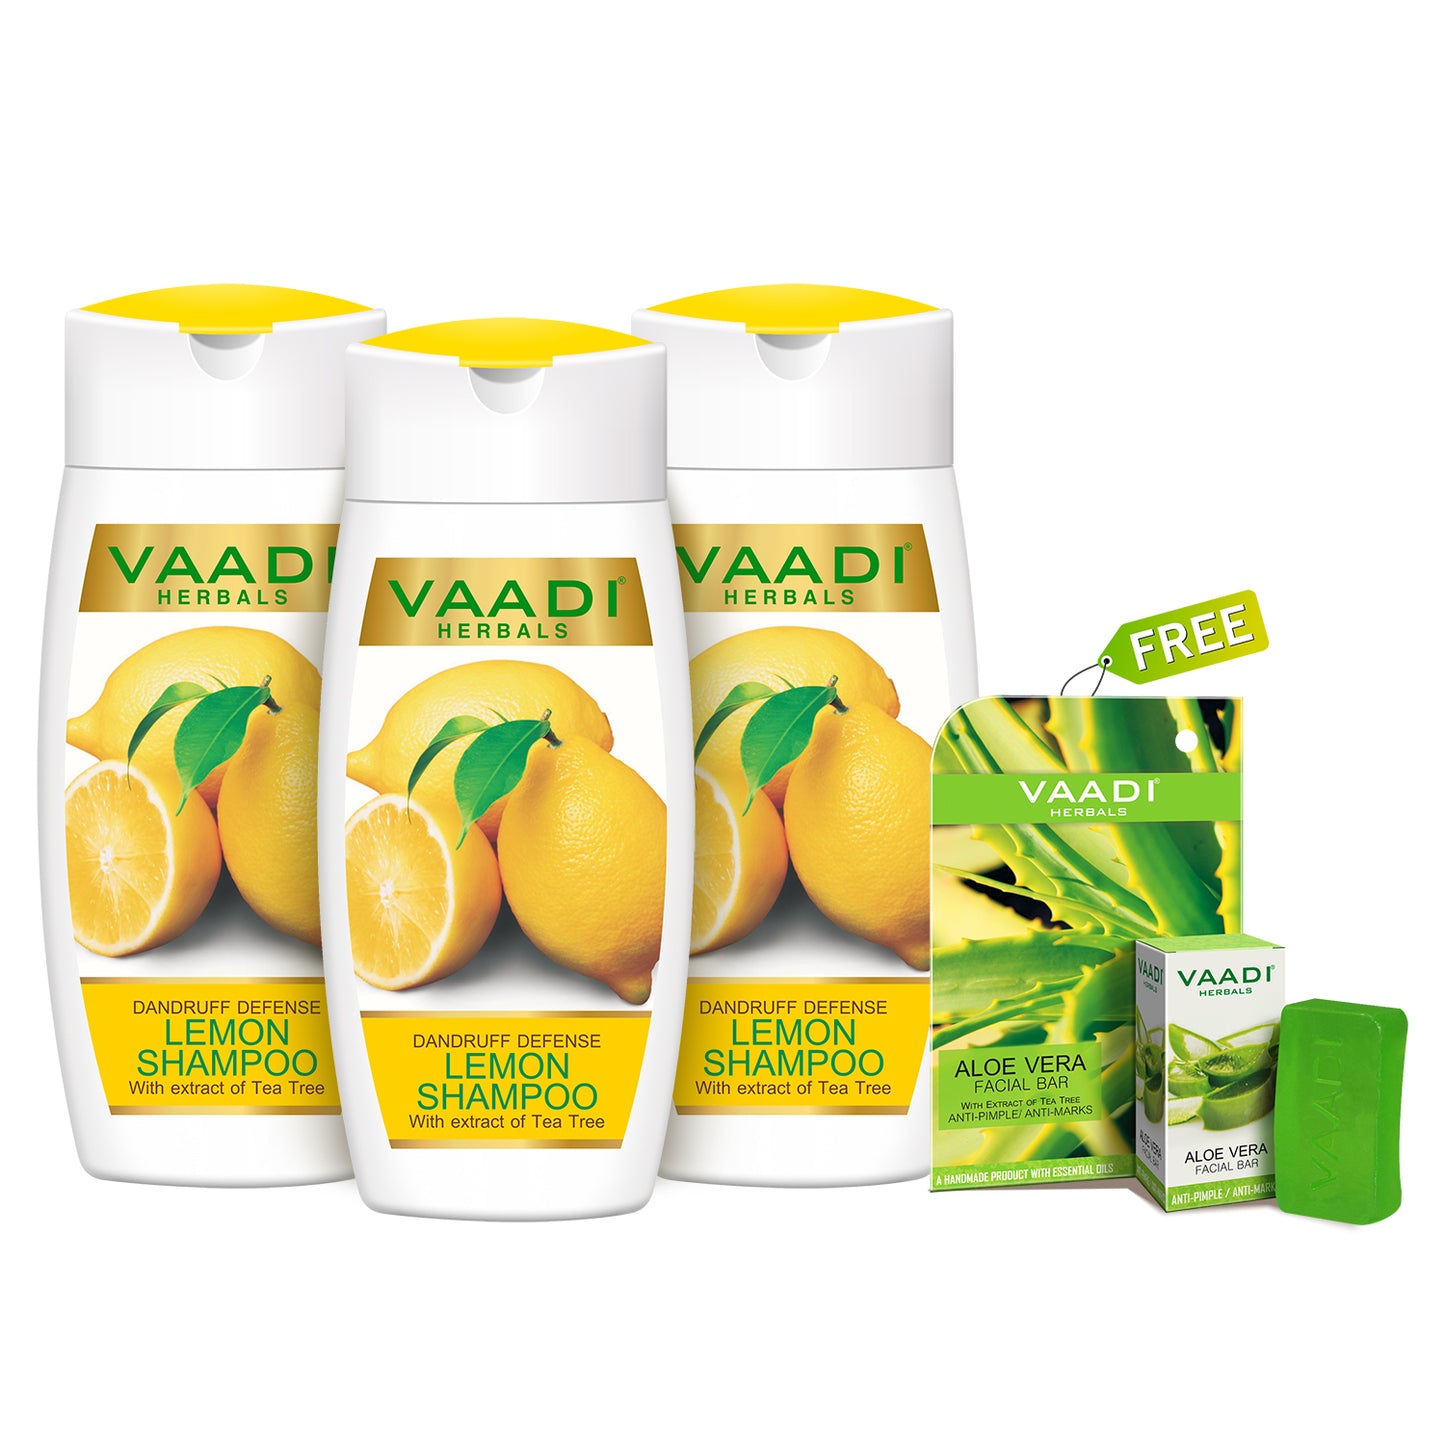 Dandruff Defense Organic Lemon Shampoo (3 x 110 ml) with free Organic Aloe Vera Facial Bar (25 gms)